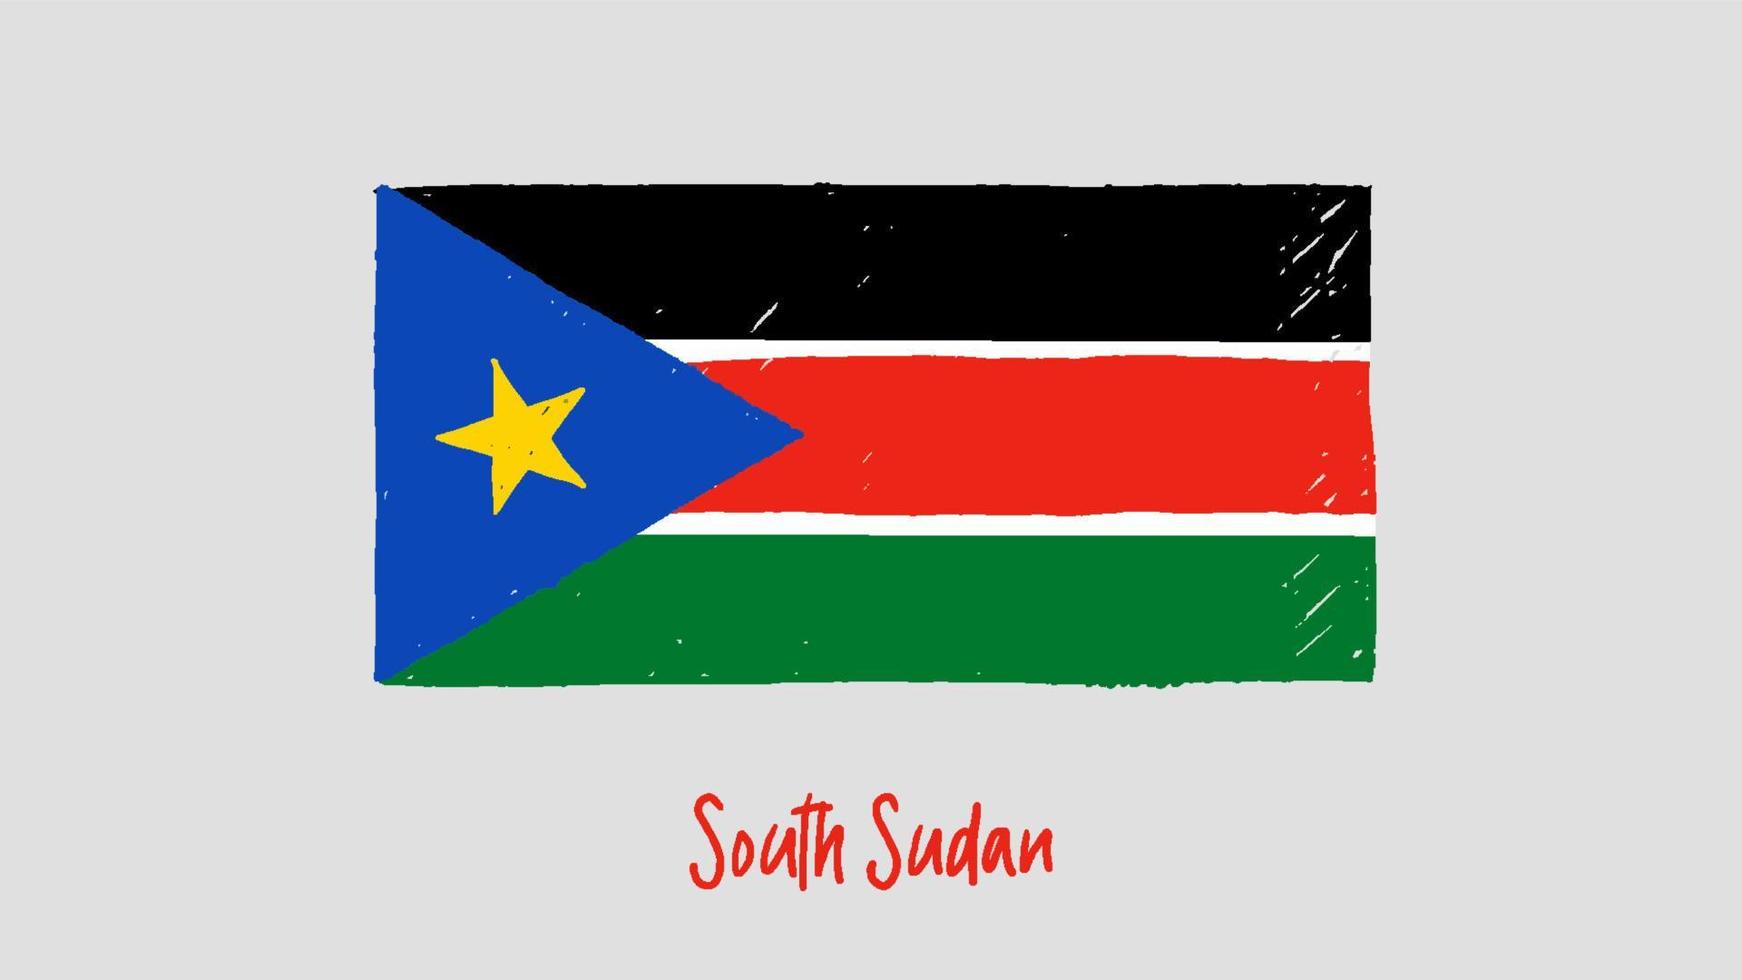 South Sudan Flag Marker or Pencil Sketch Illustration Vector